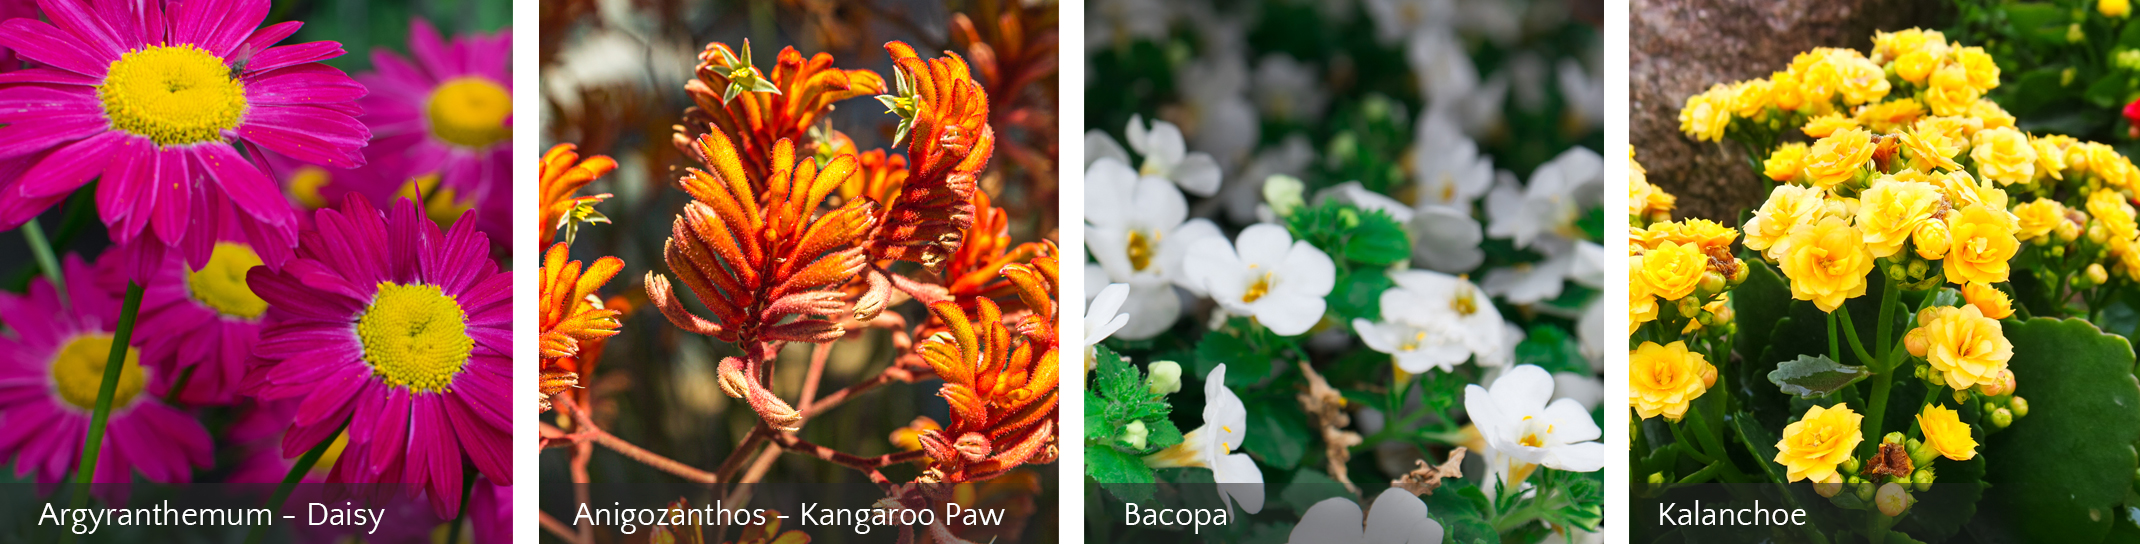 Four flowering perennials beginning with Argranthemum Daisy, Anigozanthos Kangaroo Paw, Bacopa and Kalanchoe